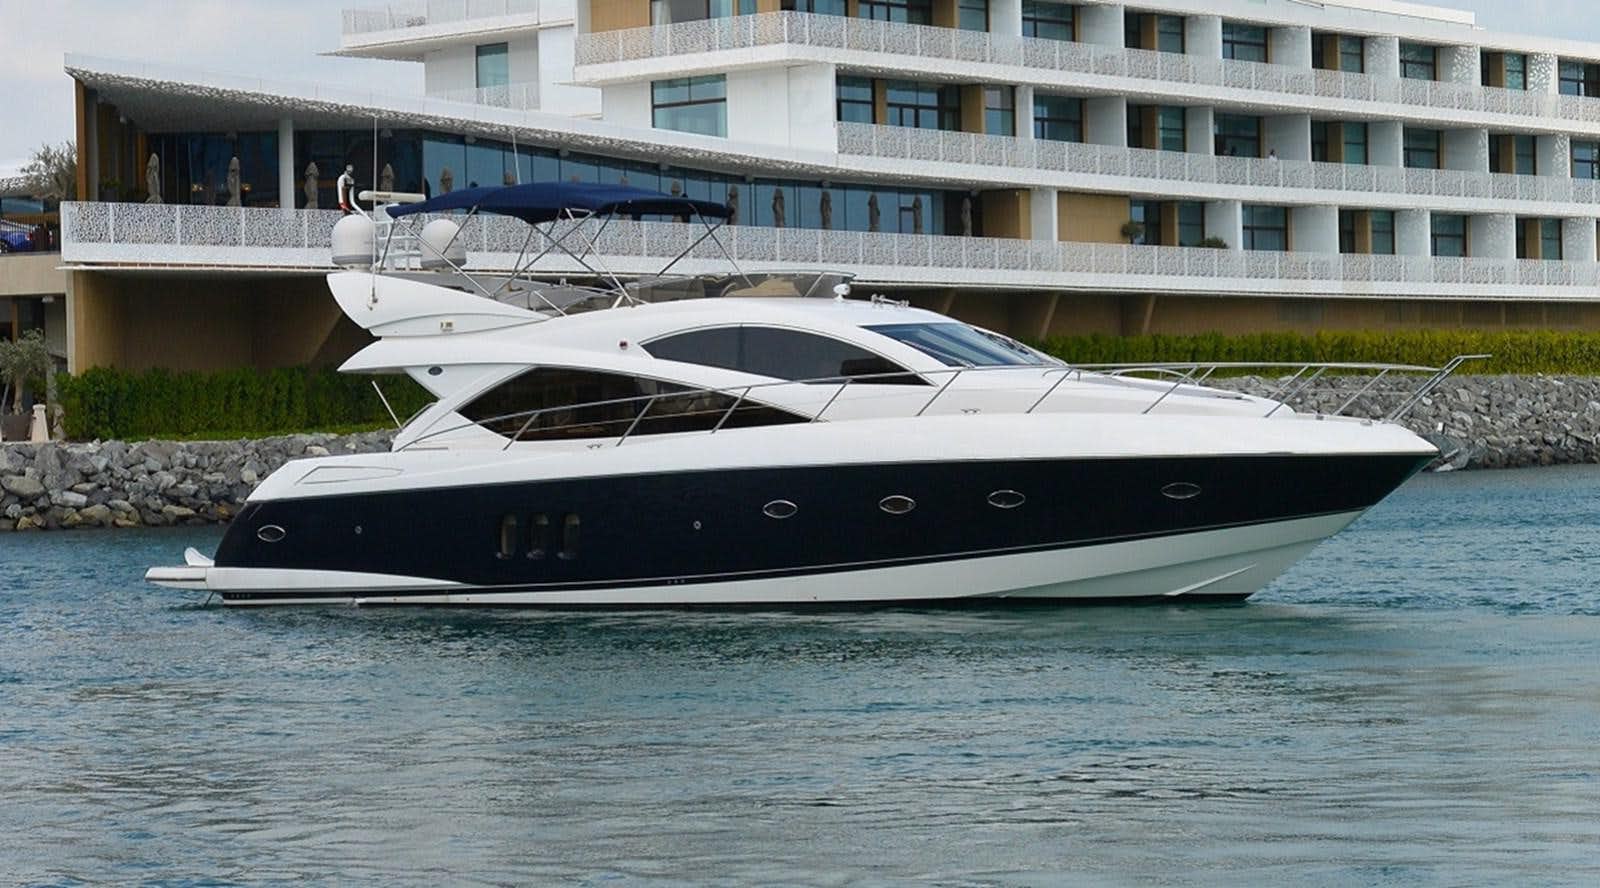 2008 sunseeker 60 manhattan
Yacht for Sale